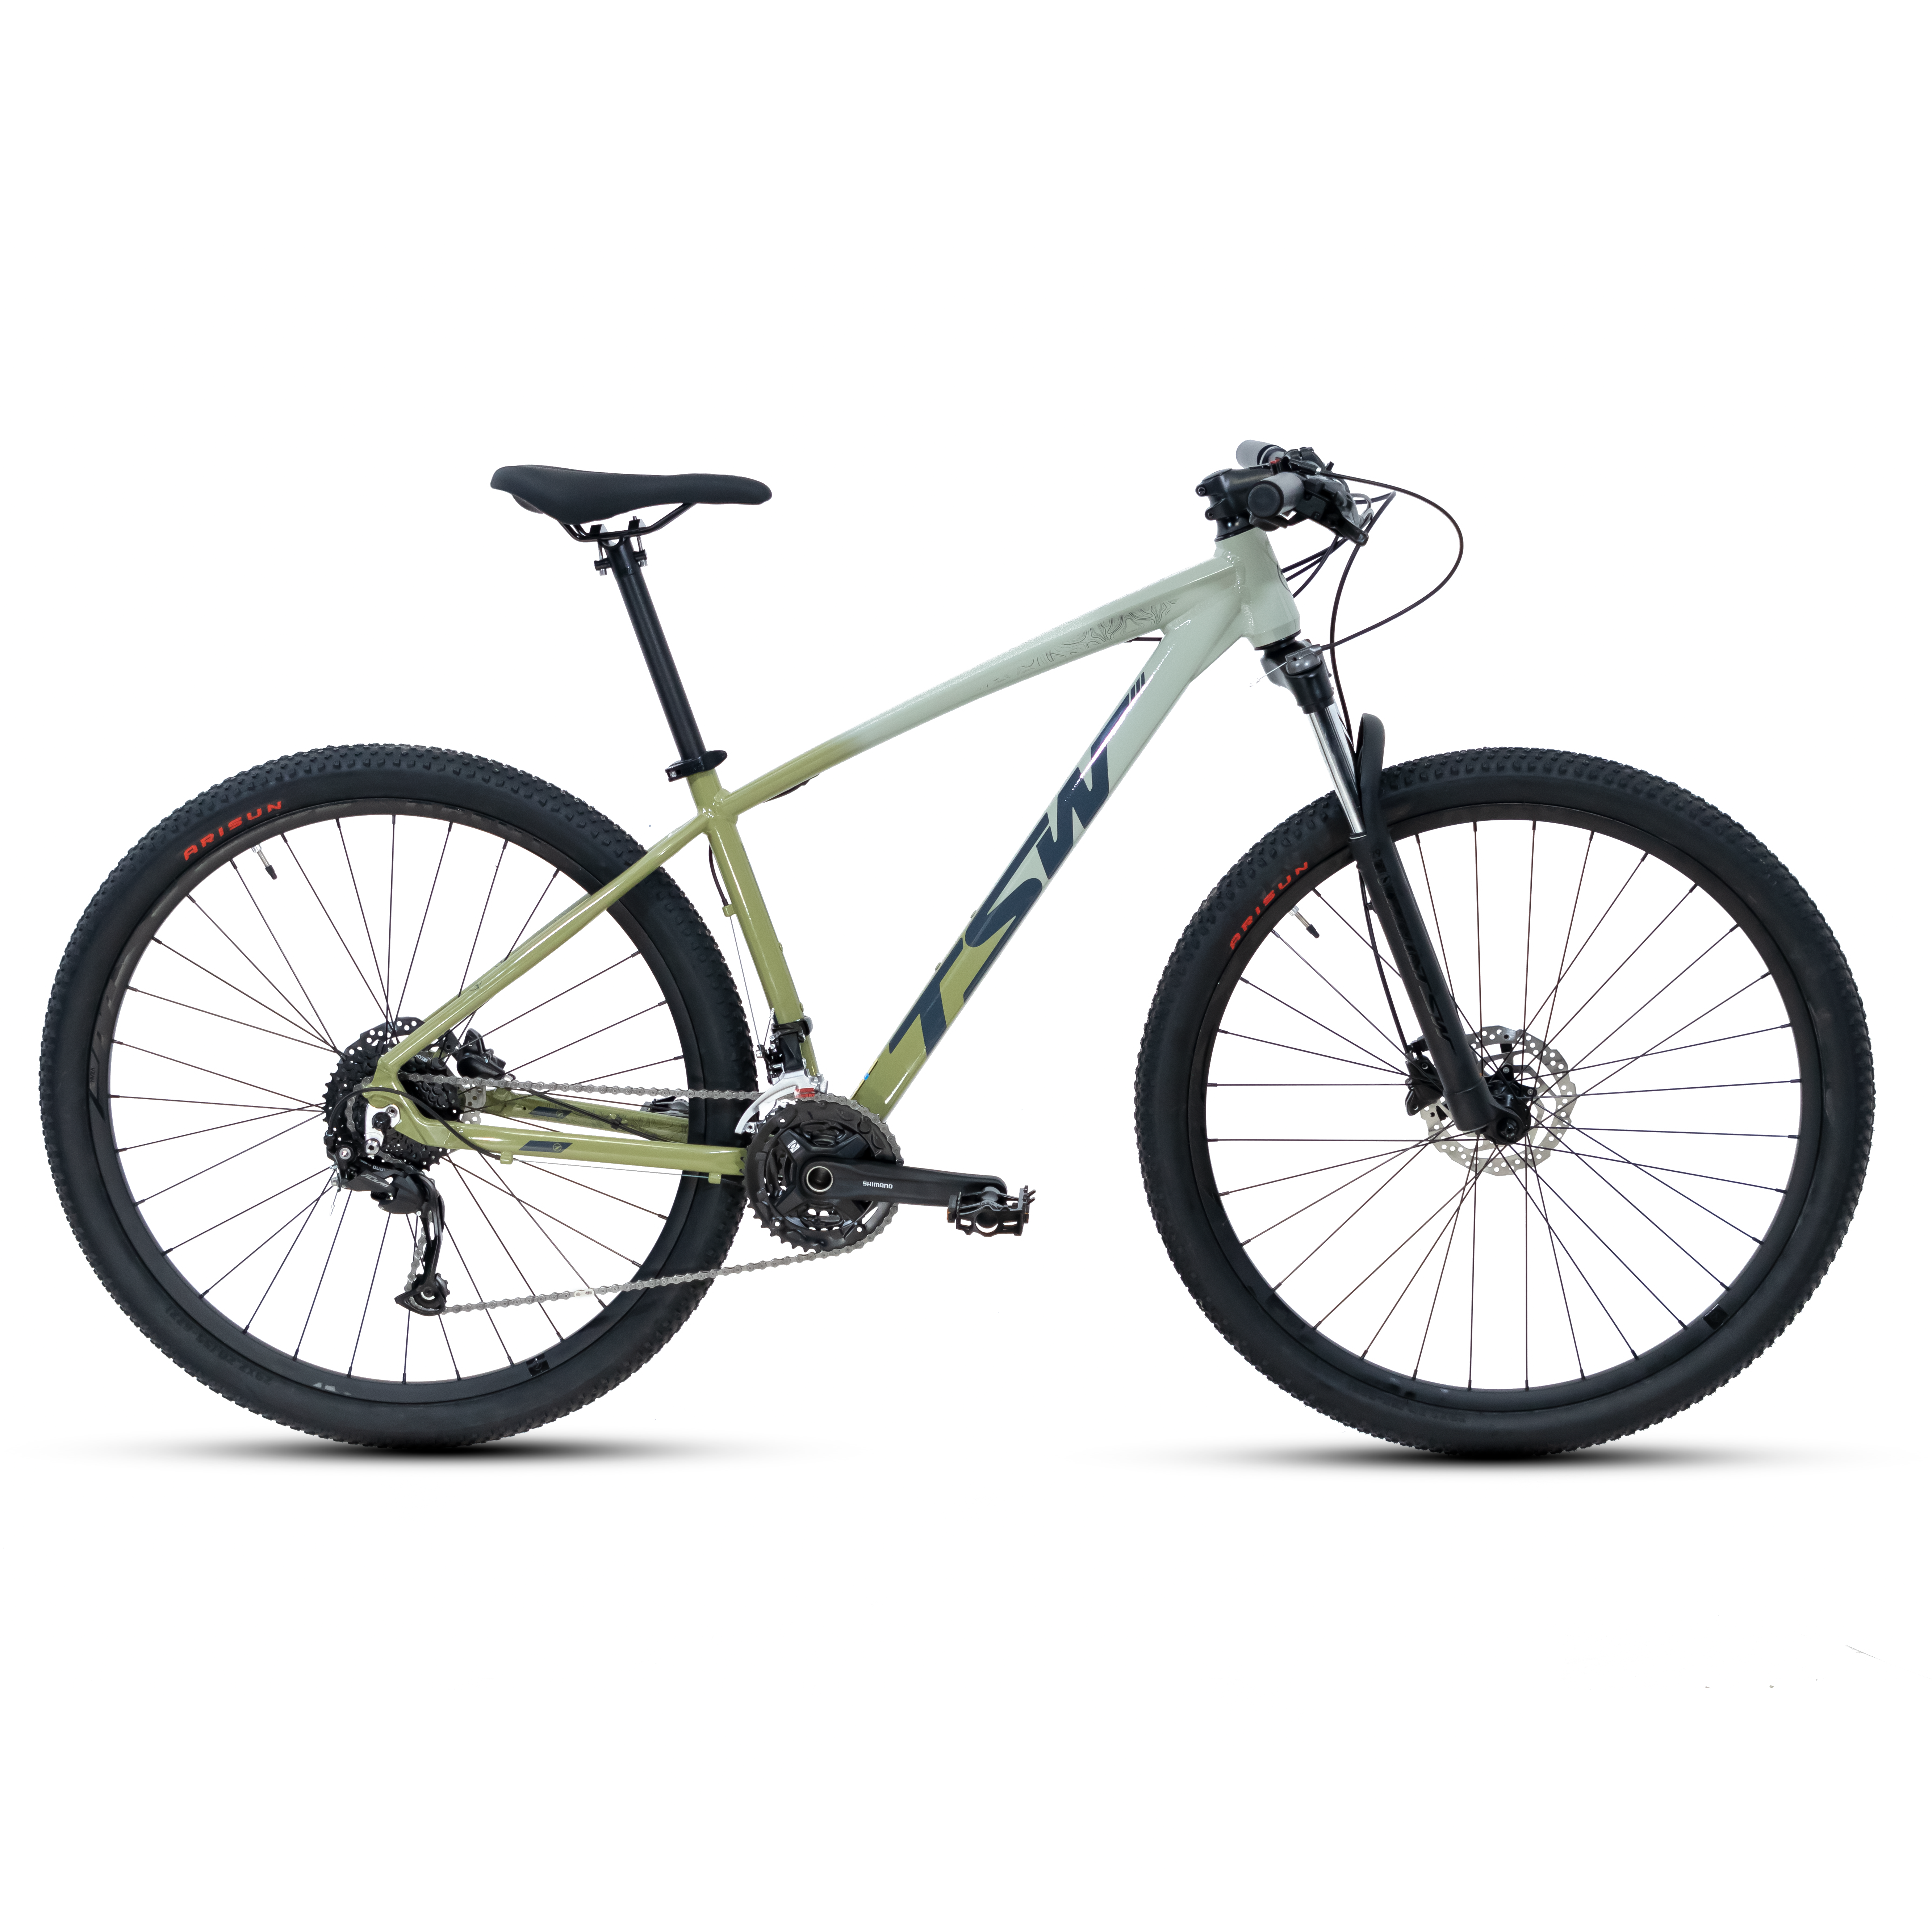 Bicicleta TSW Hunch Plus | 2021/2022 - 15.5", Cinza/Verde